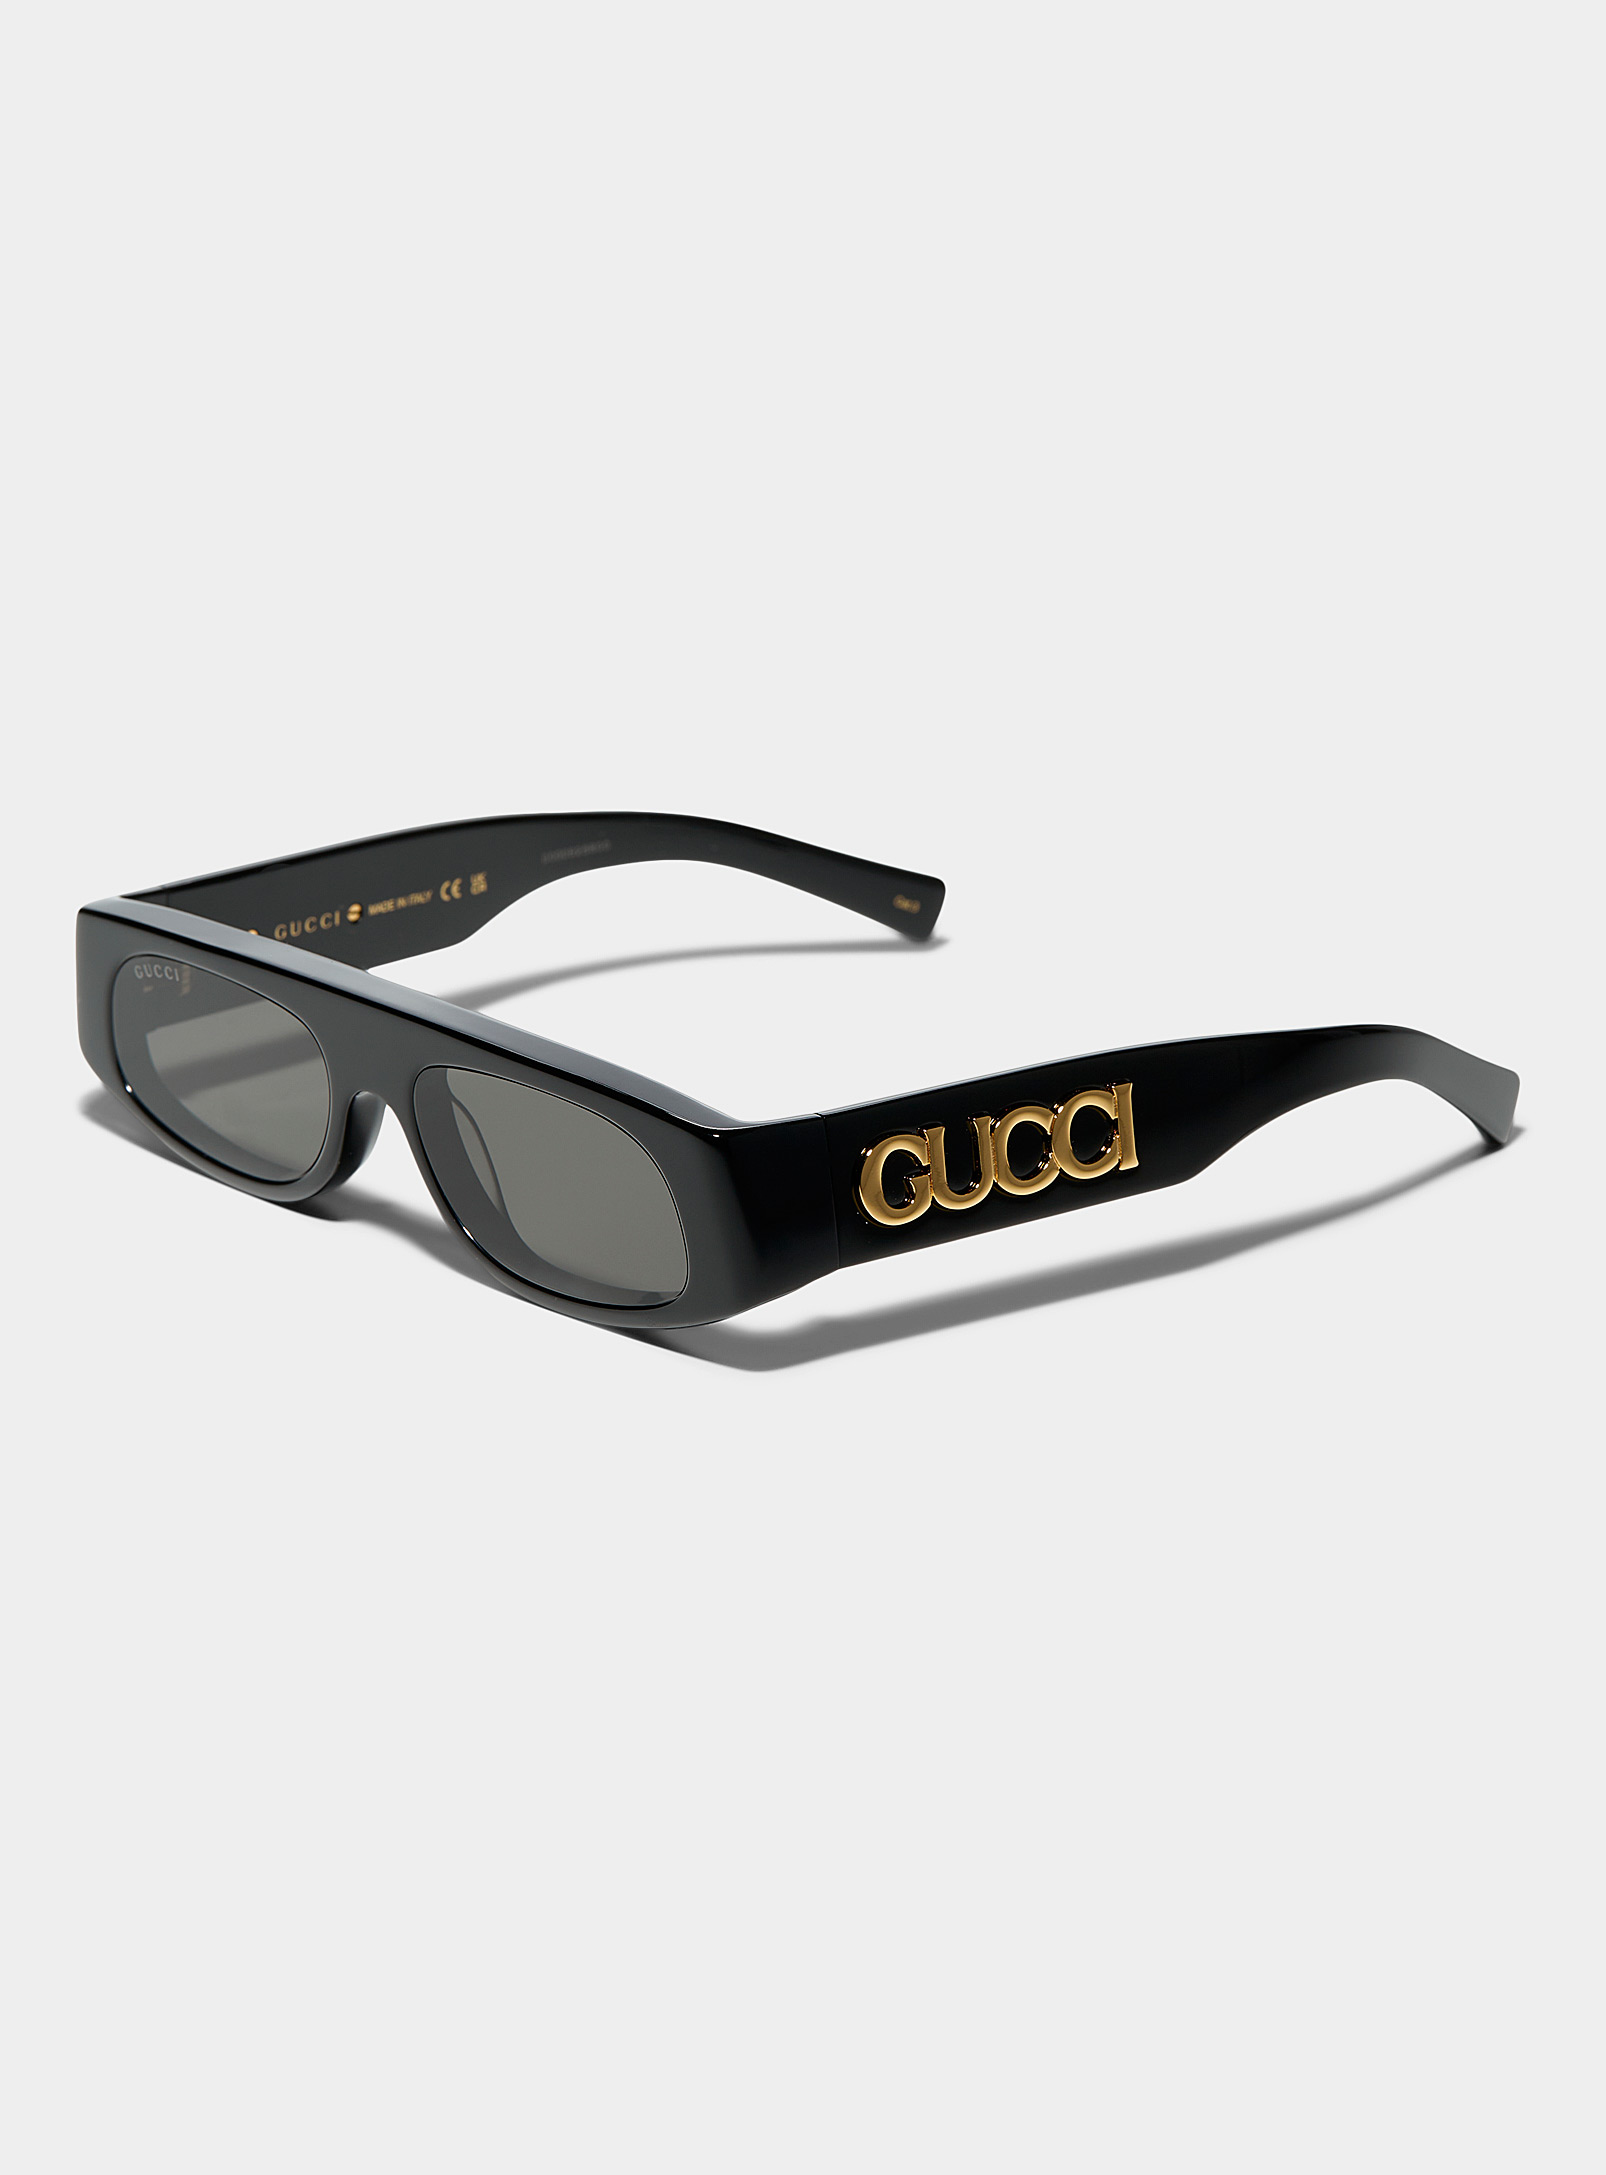 Gucci - Golden signature angular sunglasses